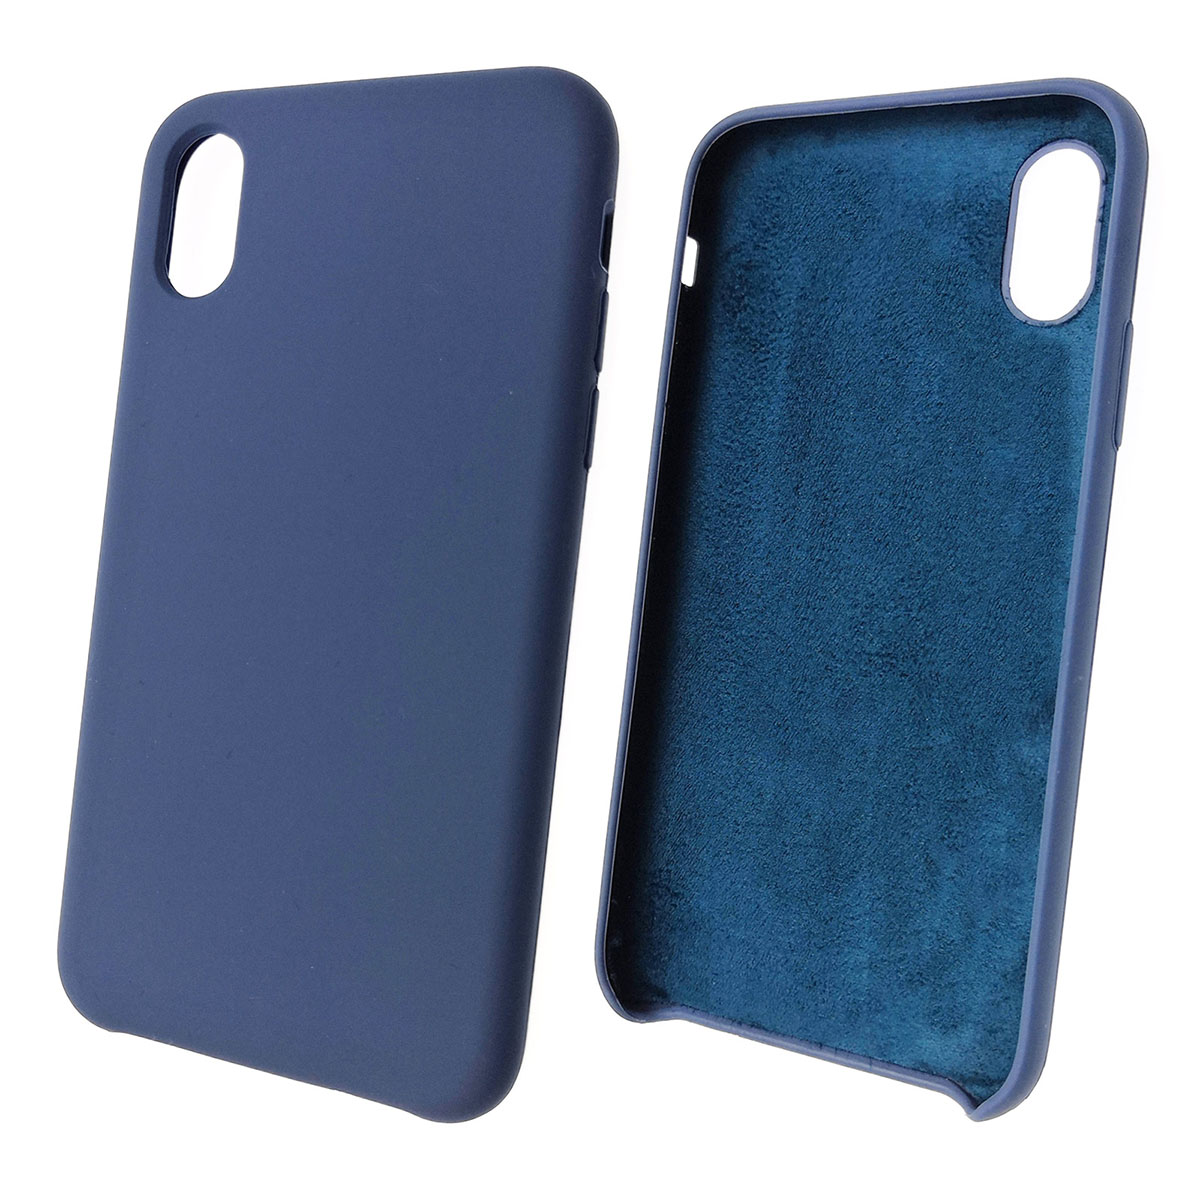 Чехол накладка Silicon Case для APPLE iPhone X, XS, силикон, бархат, цвет синий кобальт.